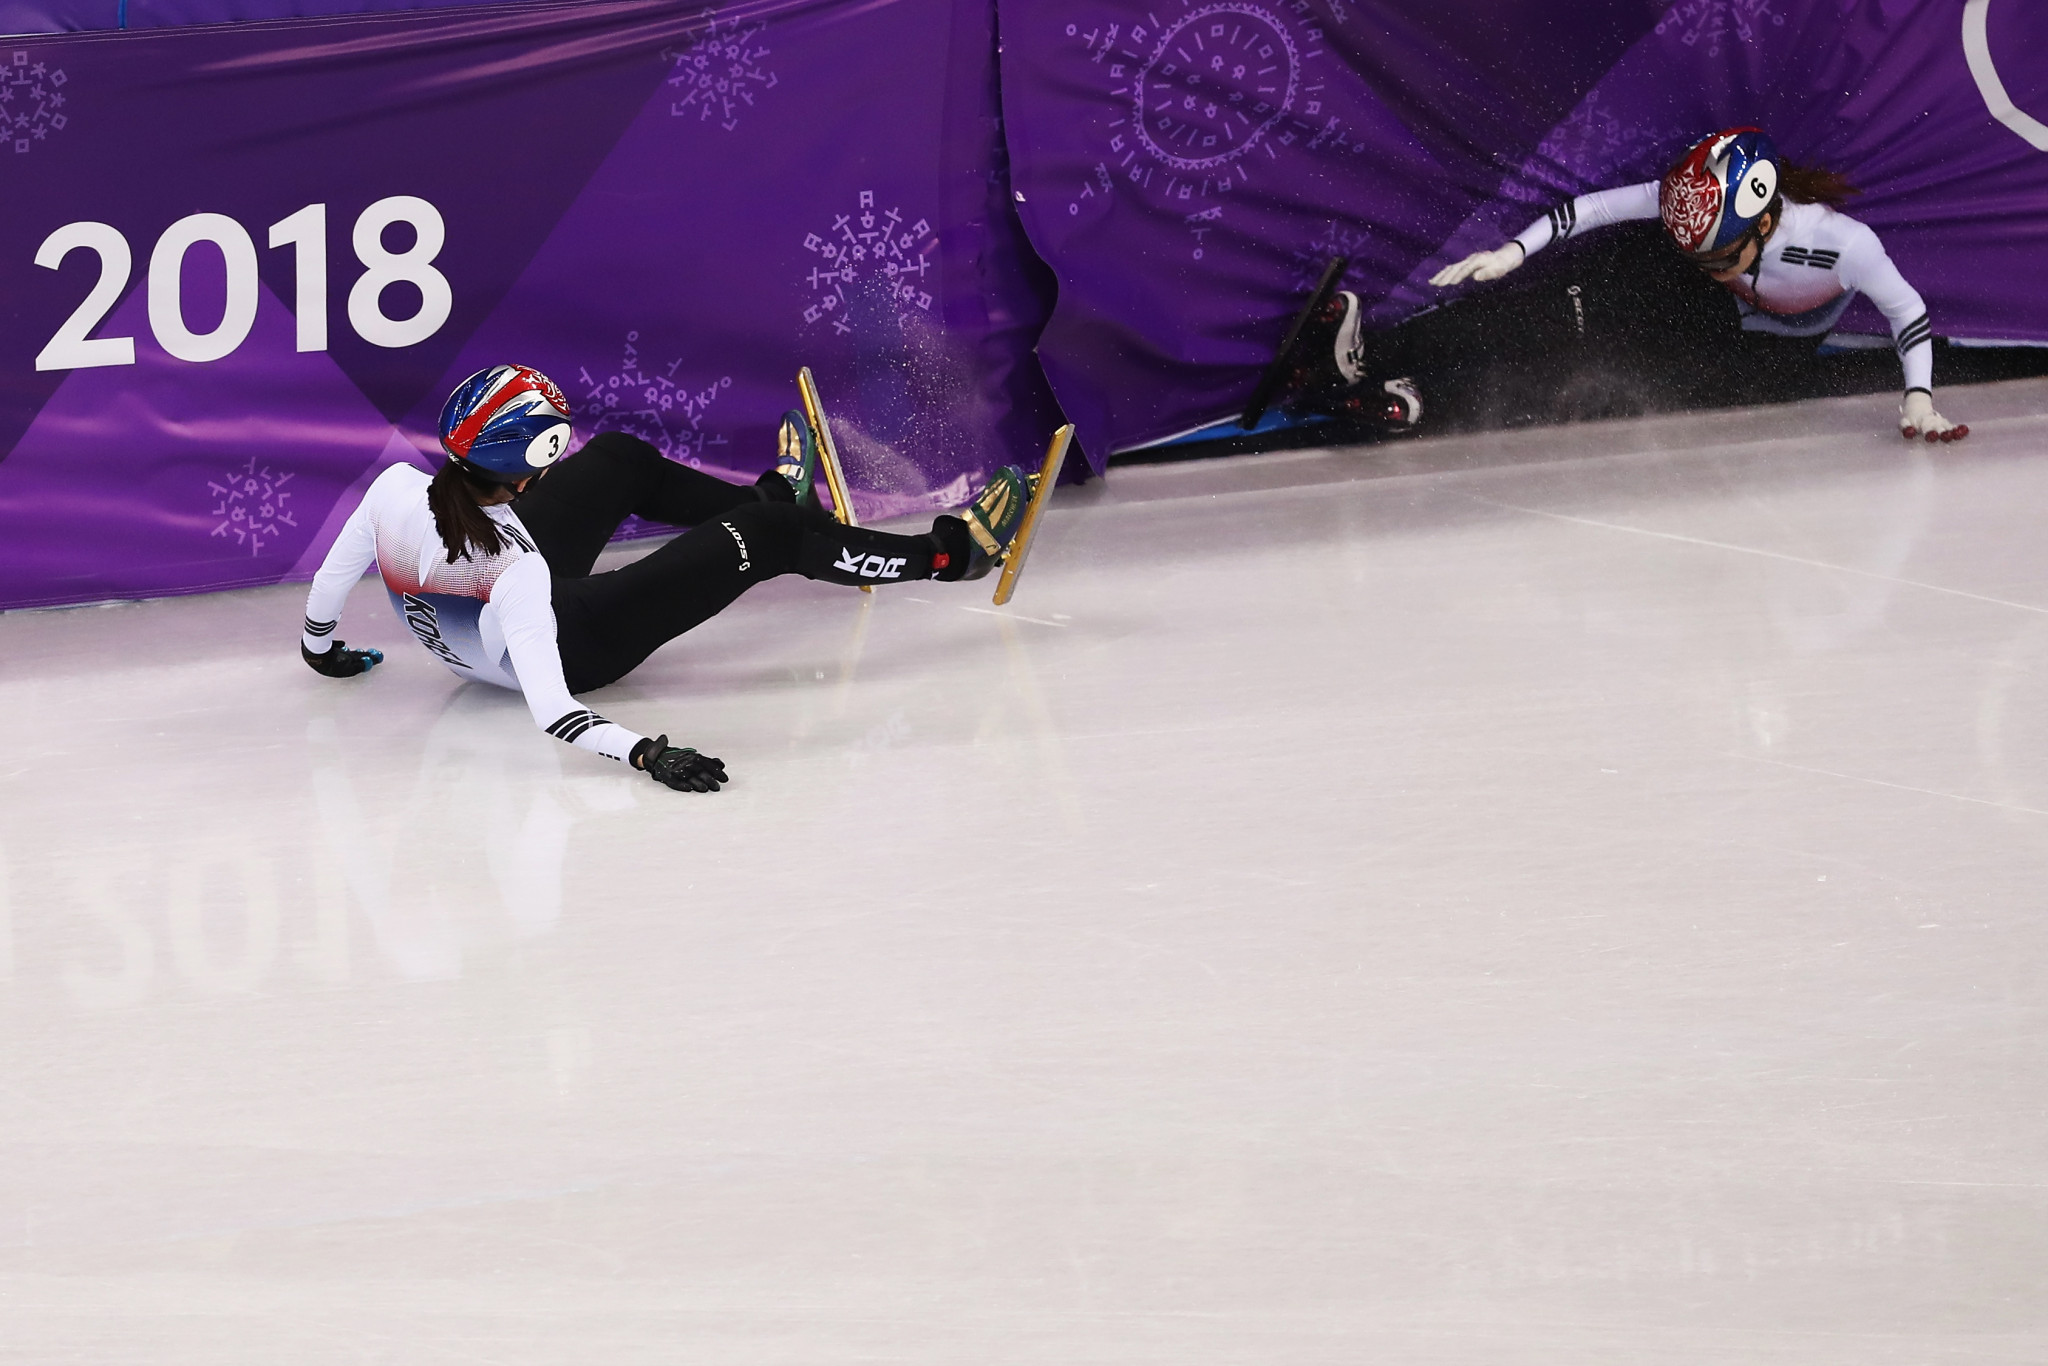 Shim Suk-hee and Choi Min-jeong crashed in the 1,000m final at Pyeongchang 2018 ©Getty Images